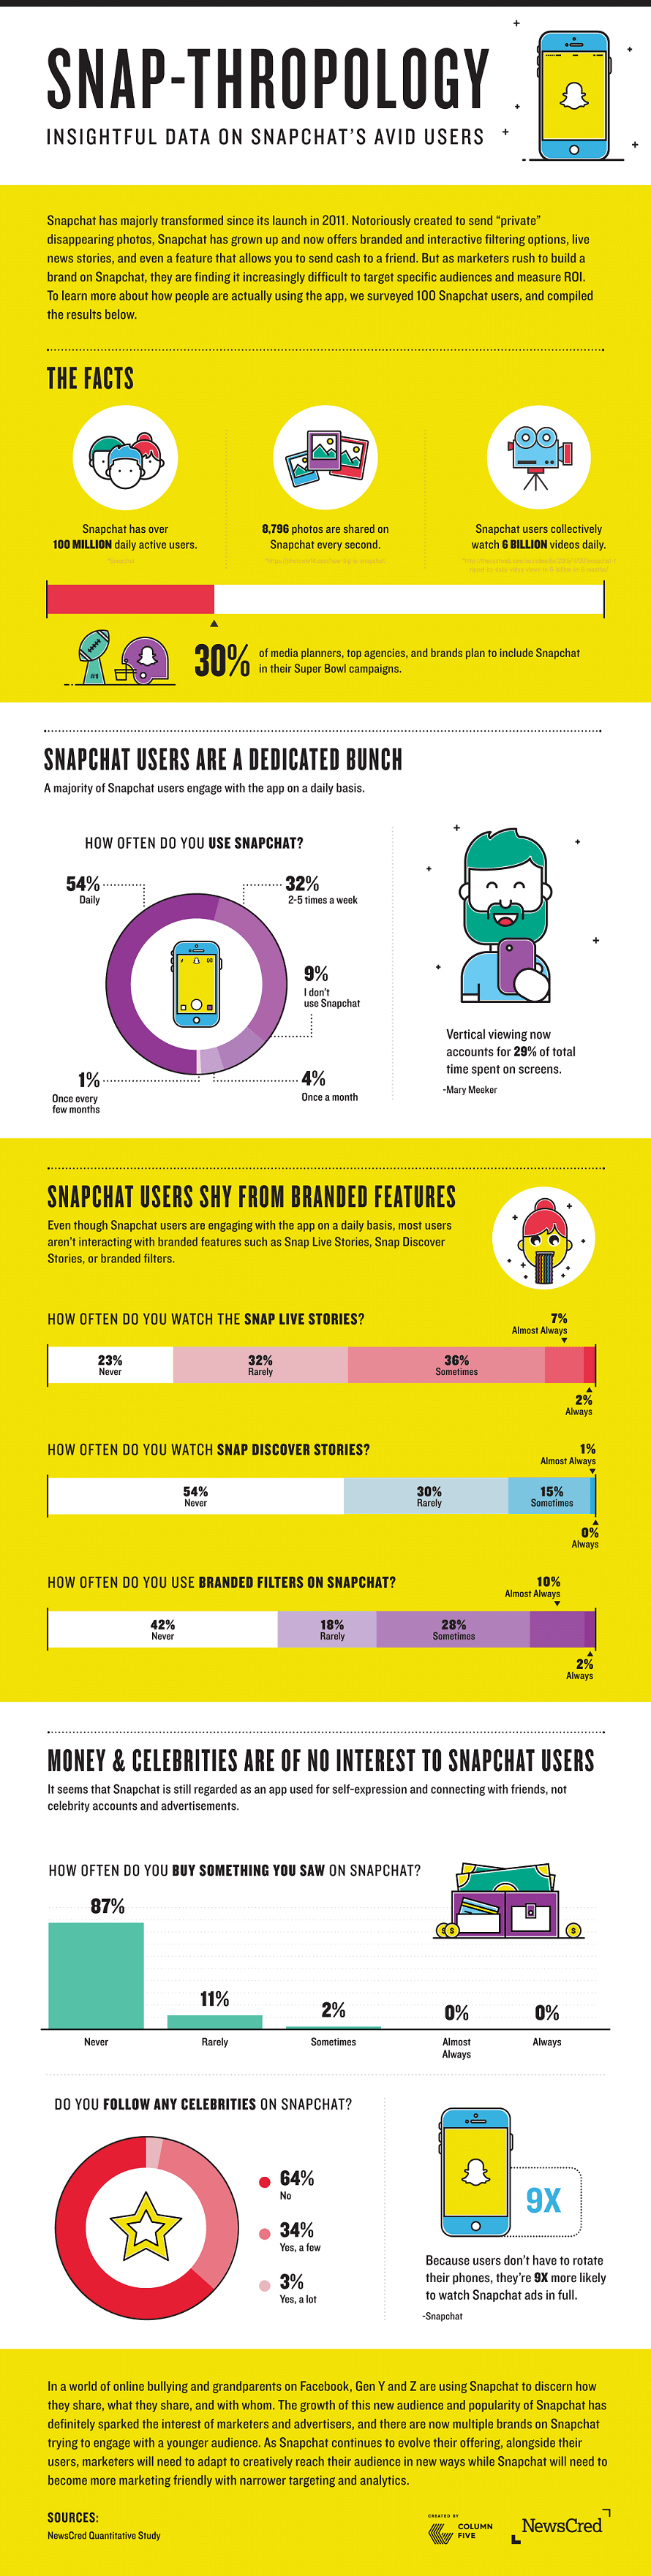 Snap-Thropology: Insightful data on Snapchat's avid users